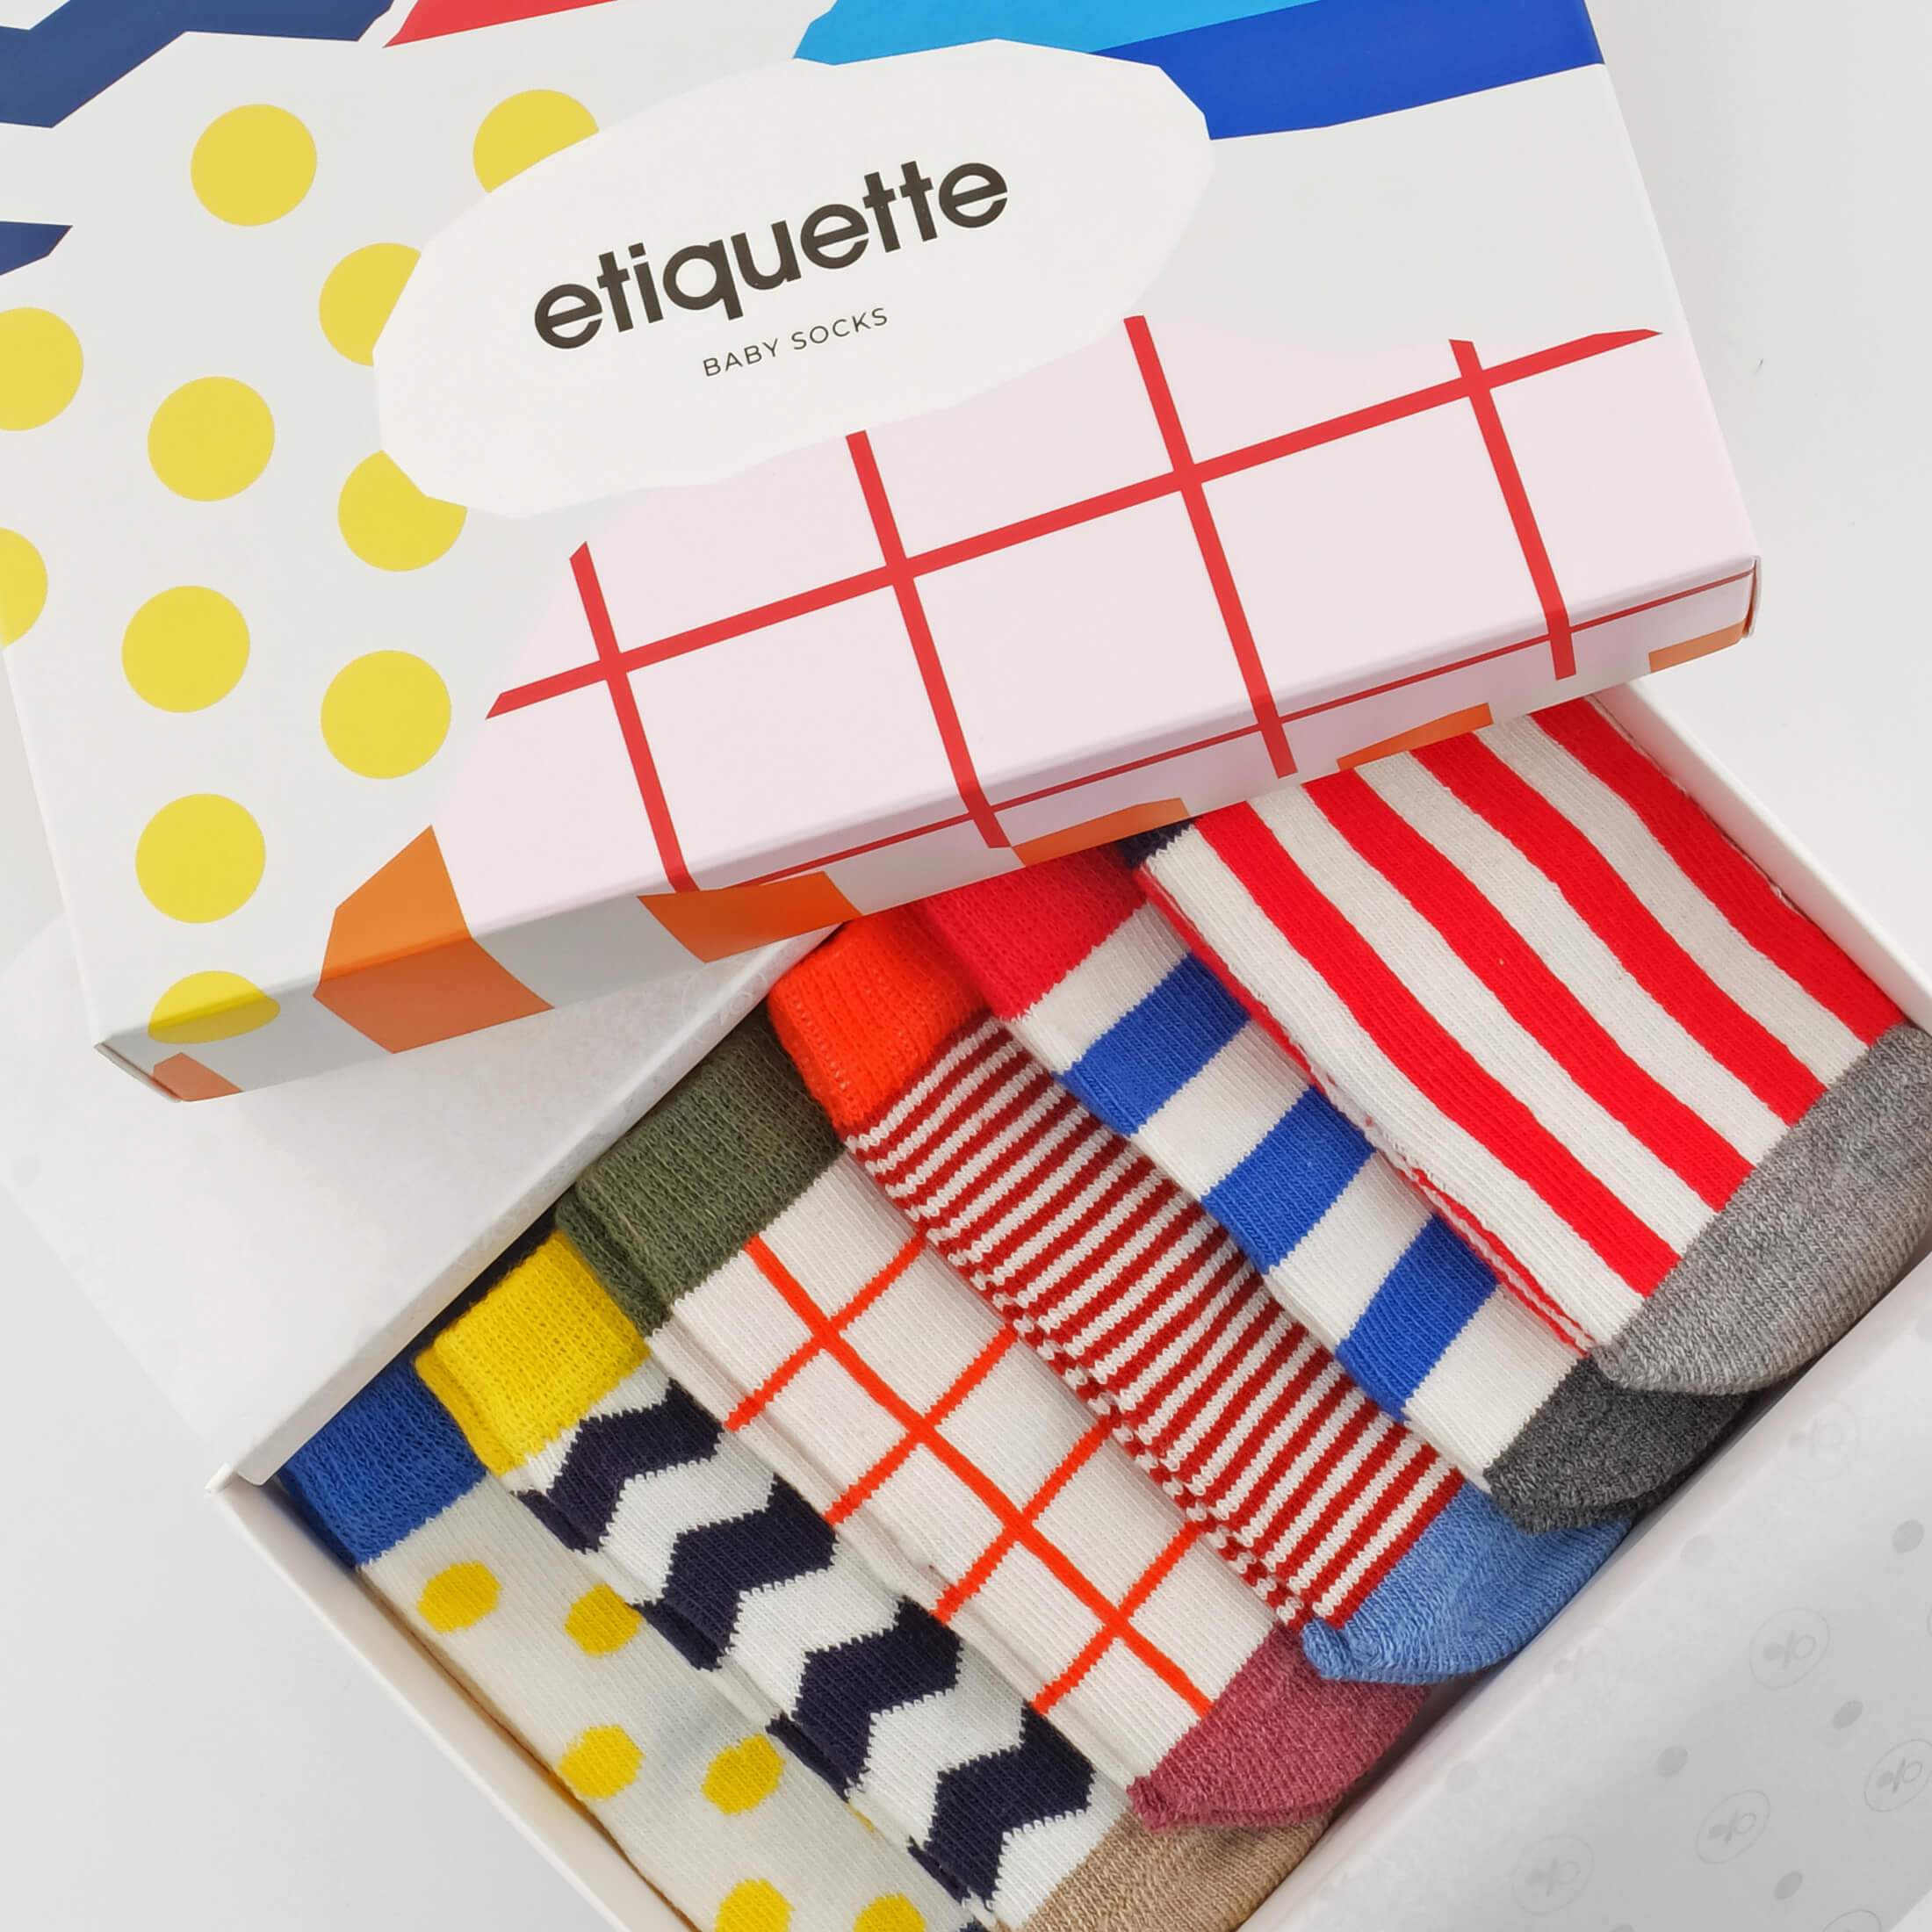 Baby Socks - Graphix Baby Socks Gift Box - Colorful baby socks - top box view⎪Lil'Etiquette Clothiers